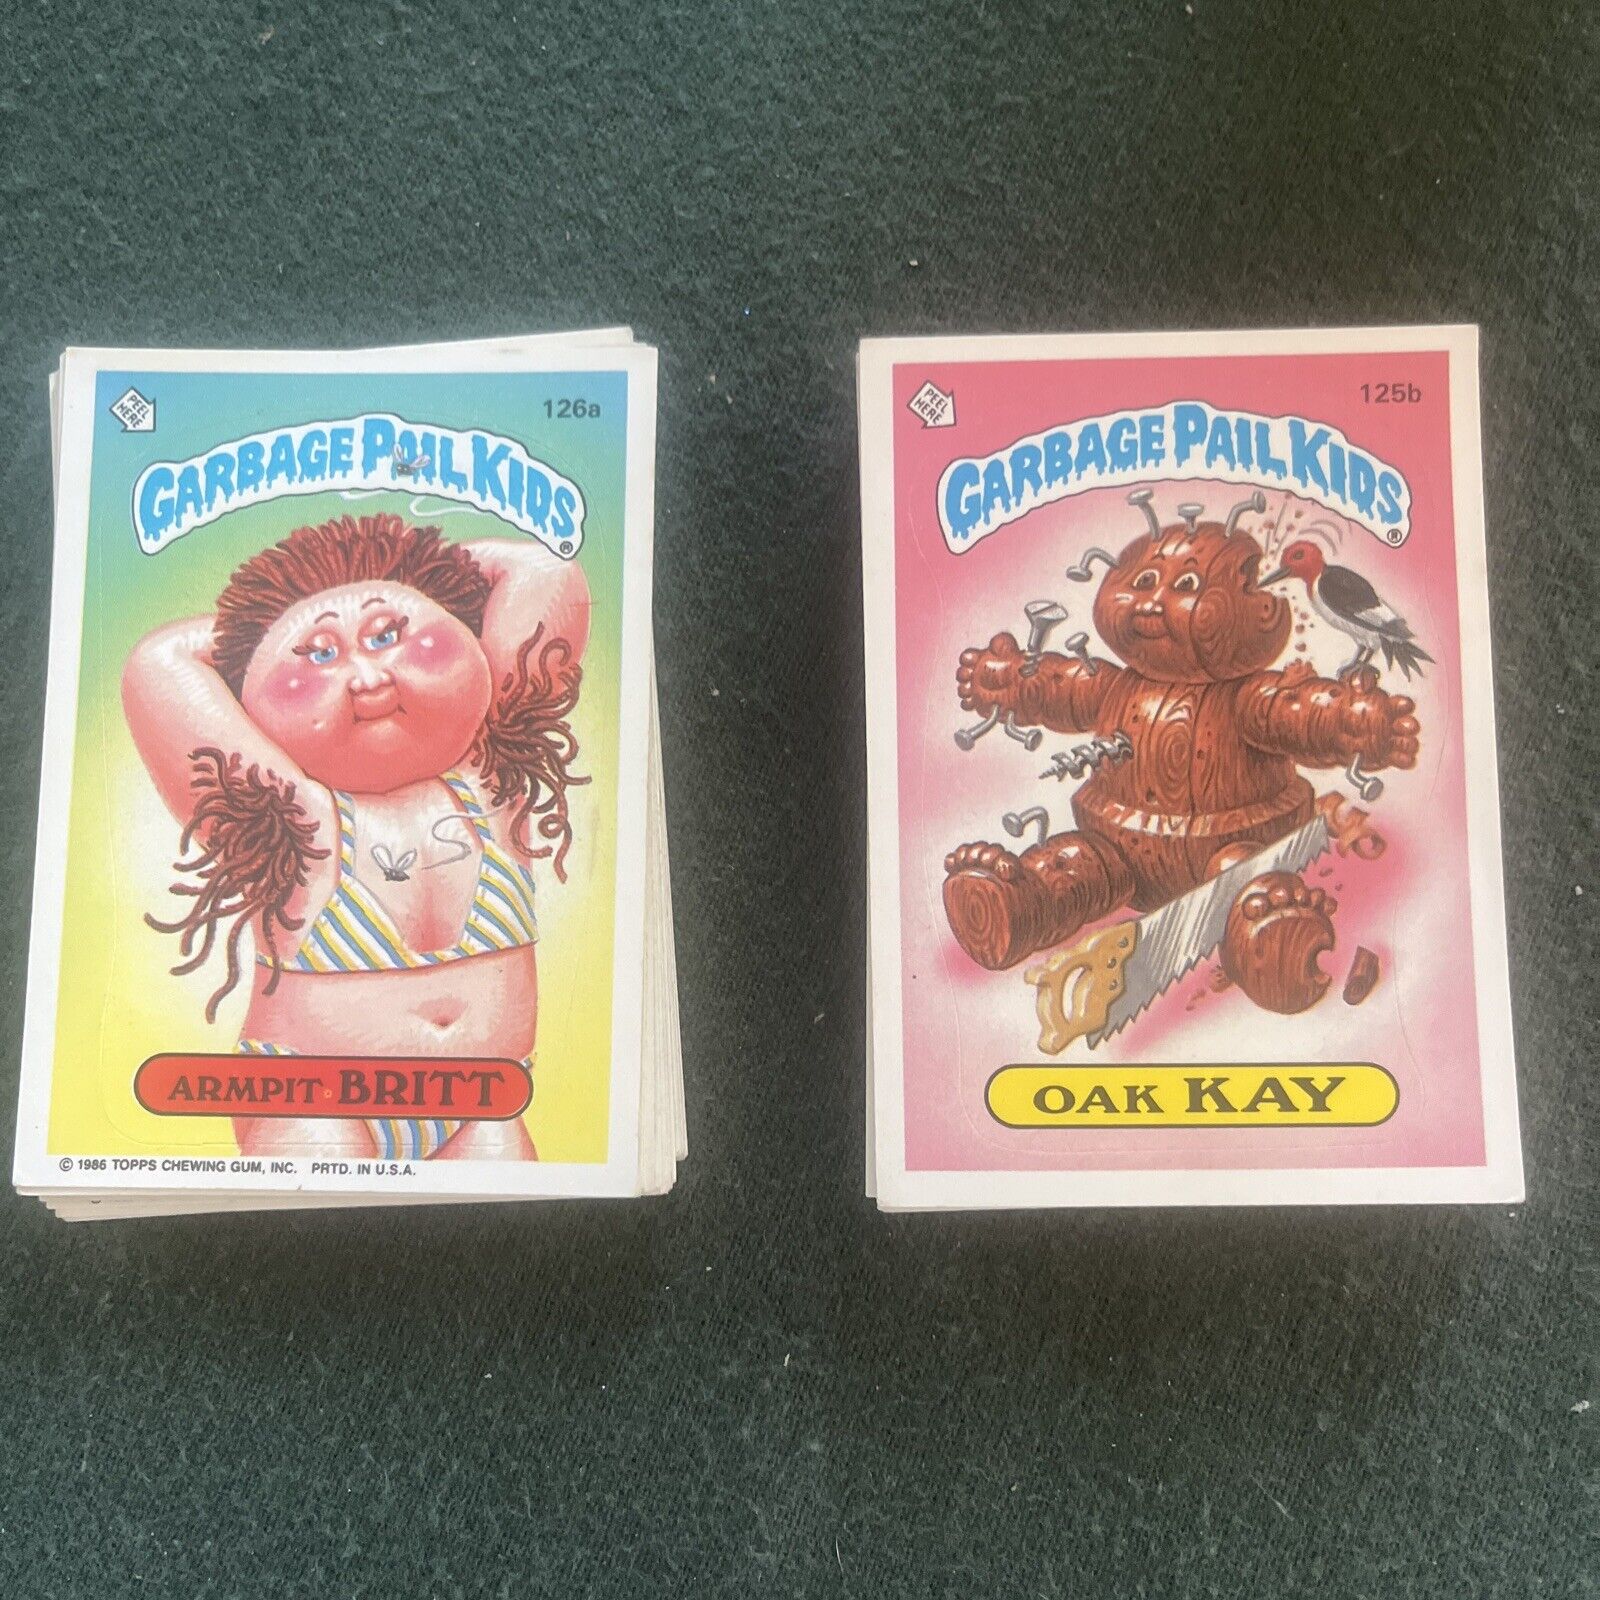 Garbage Pail Kids Series 4 39 Cards Out Of 84 Card Series - No Duplicates